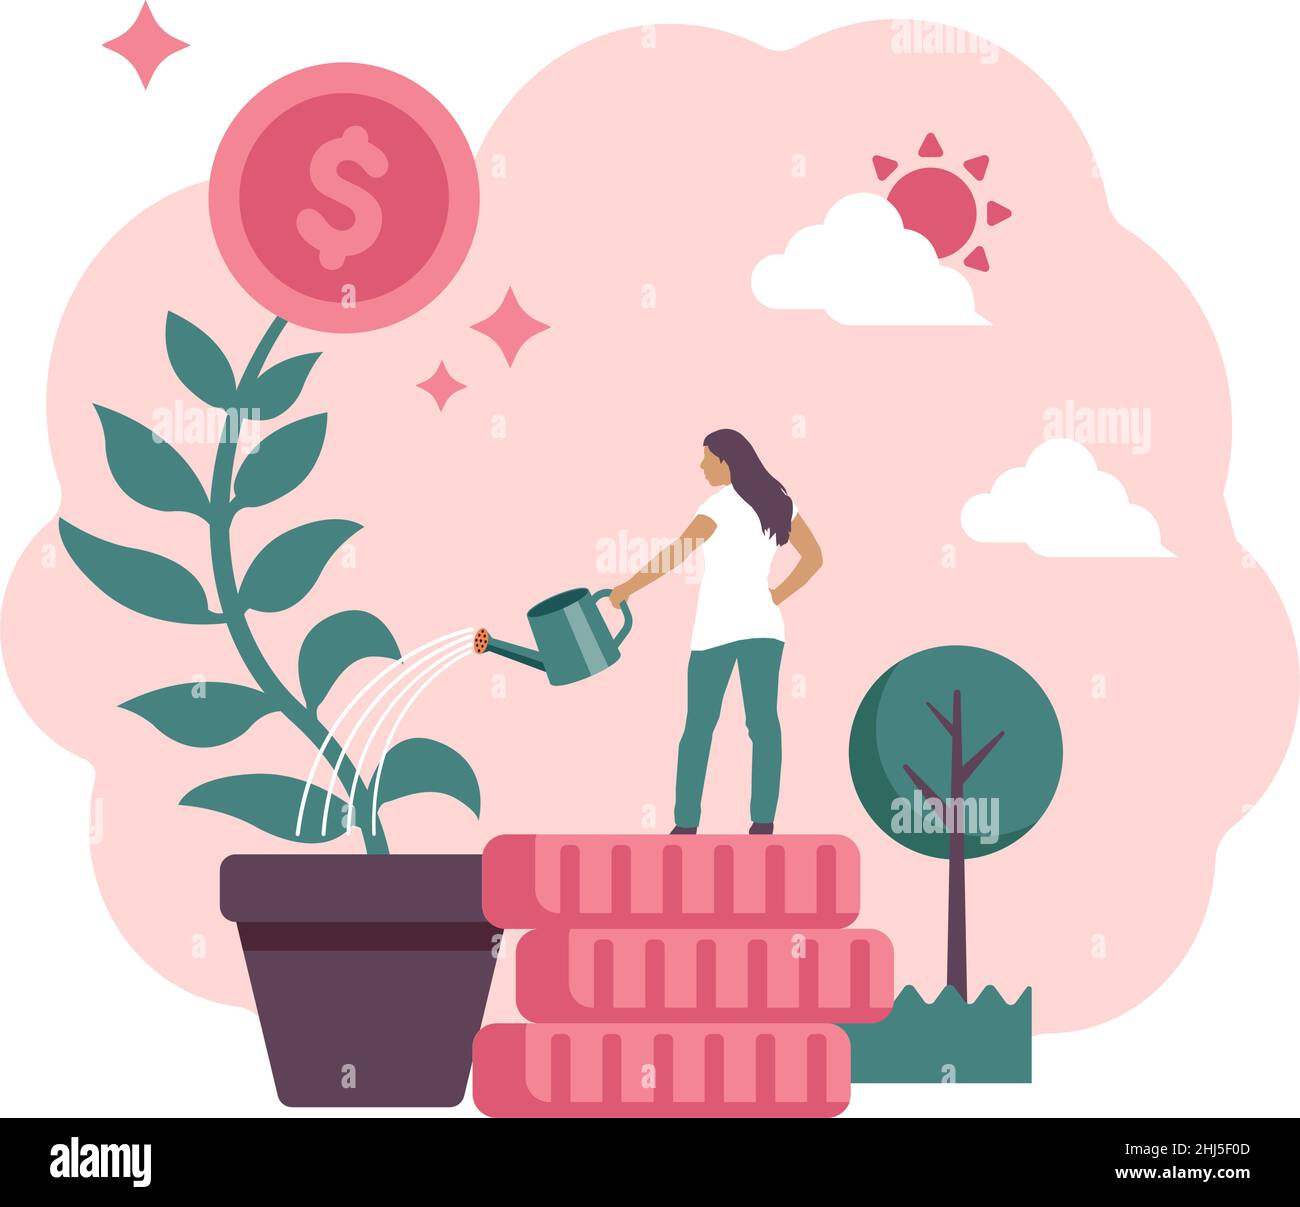 Saving money, making money concept vector illustration Stock Vector